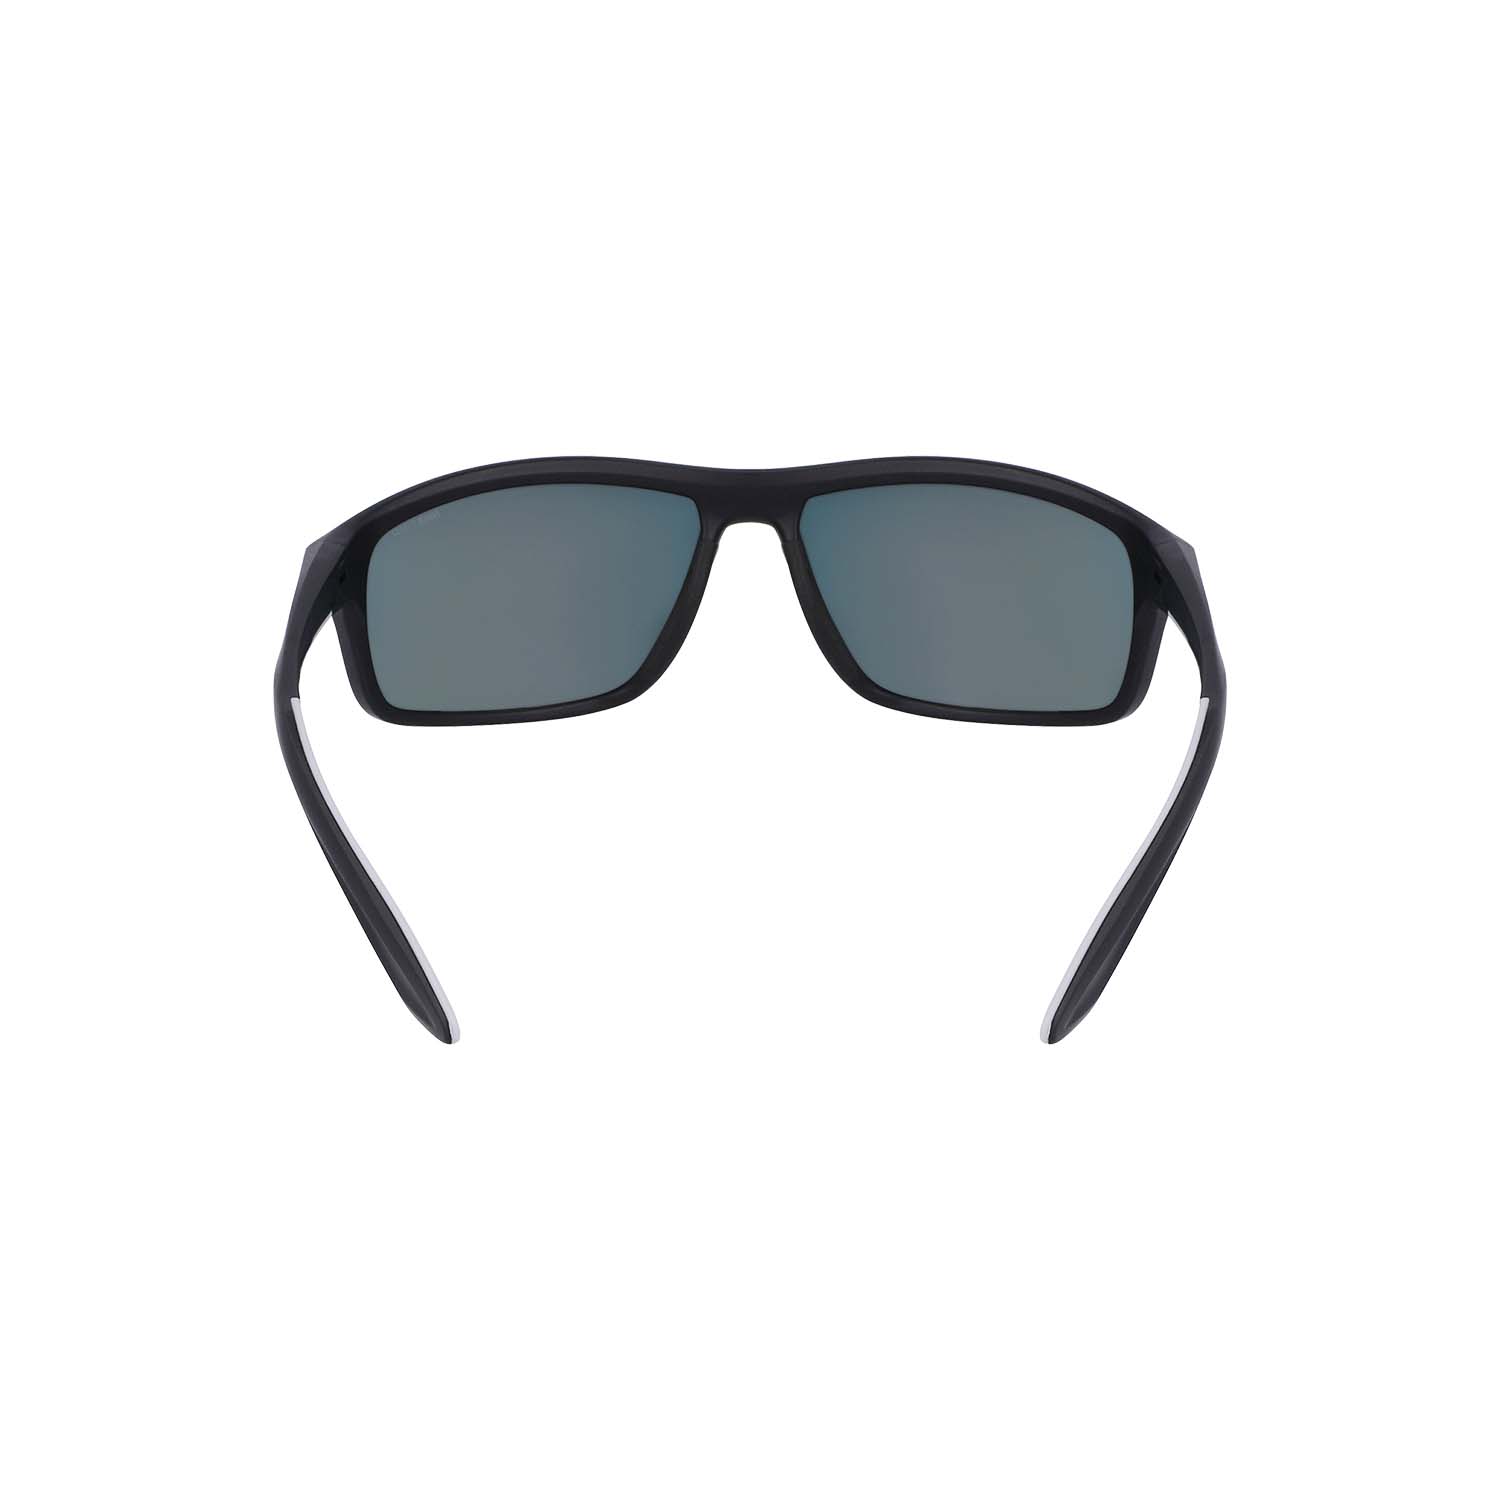 Nike Adrenaline 22 Sunglasses - Matte Black/Field Tint